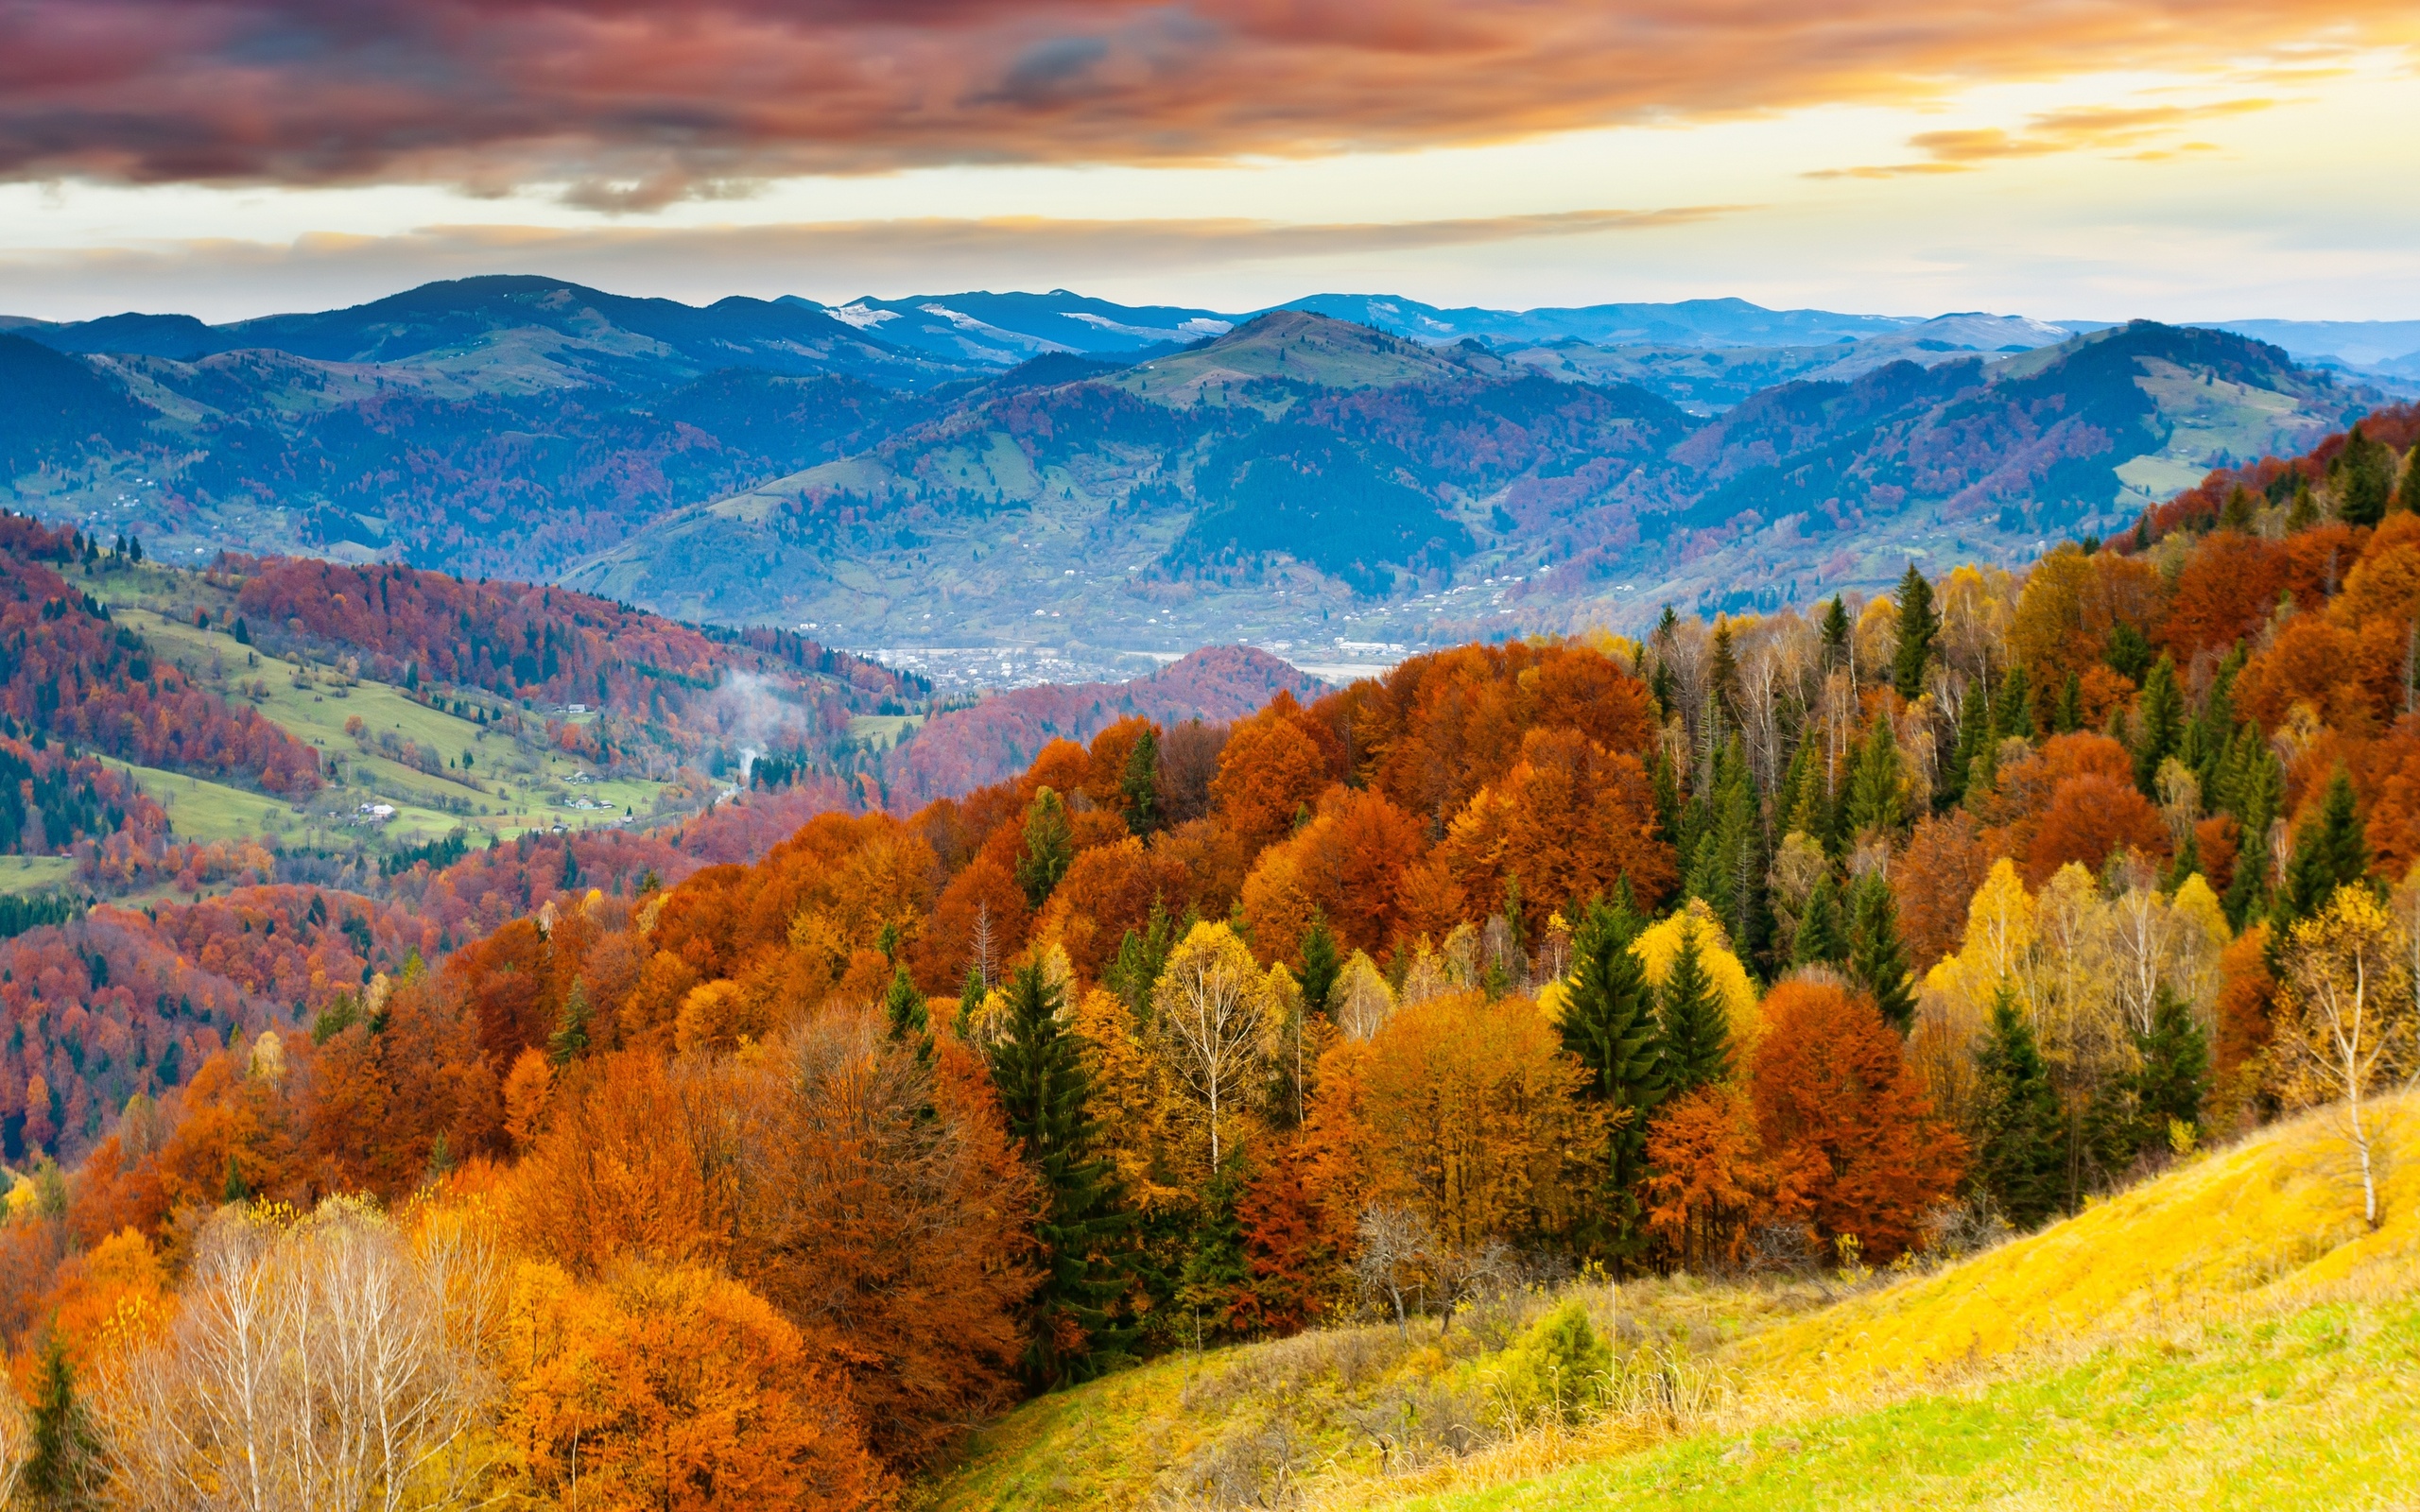 Wallpaper, 2560x1600 px, autumn, beautiful, clouds, landscape, mountains, sky, sunset, trees, winter 2560x1600